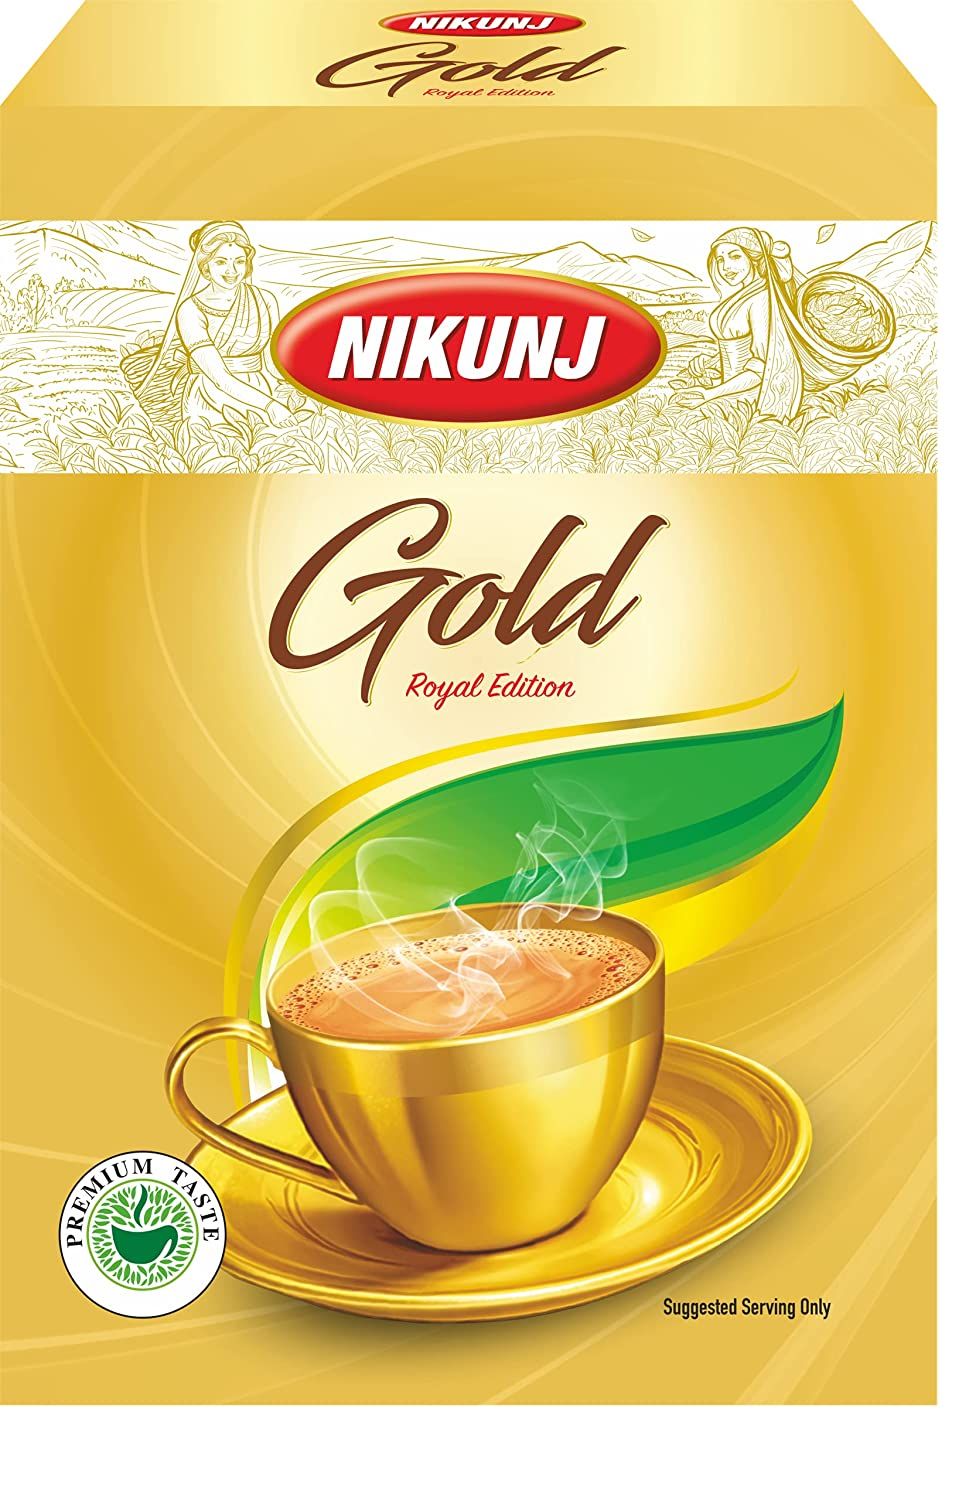 Nikunj Gold Tea Royal Edition Image